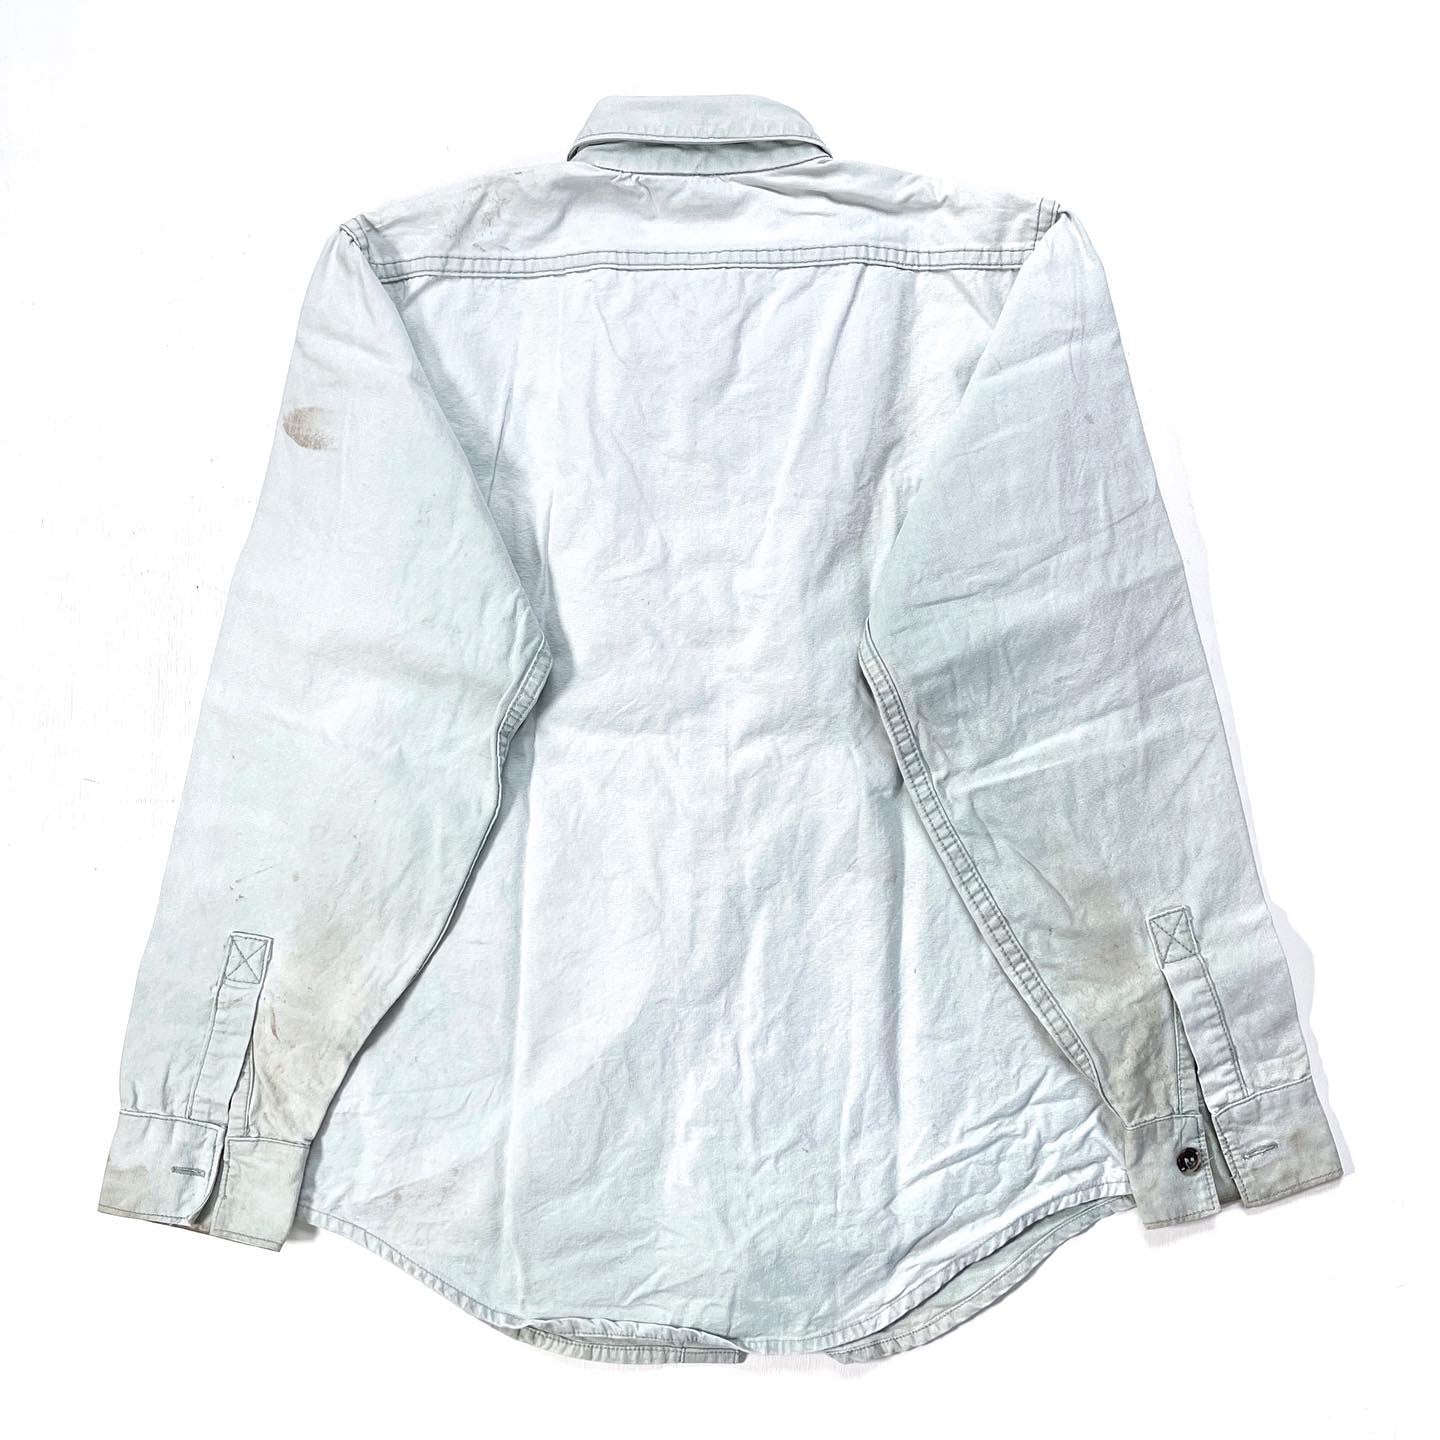 1970s Patagonia “Big Label” Cotton Canvas Shirt, Faded Seafoam (S/M)